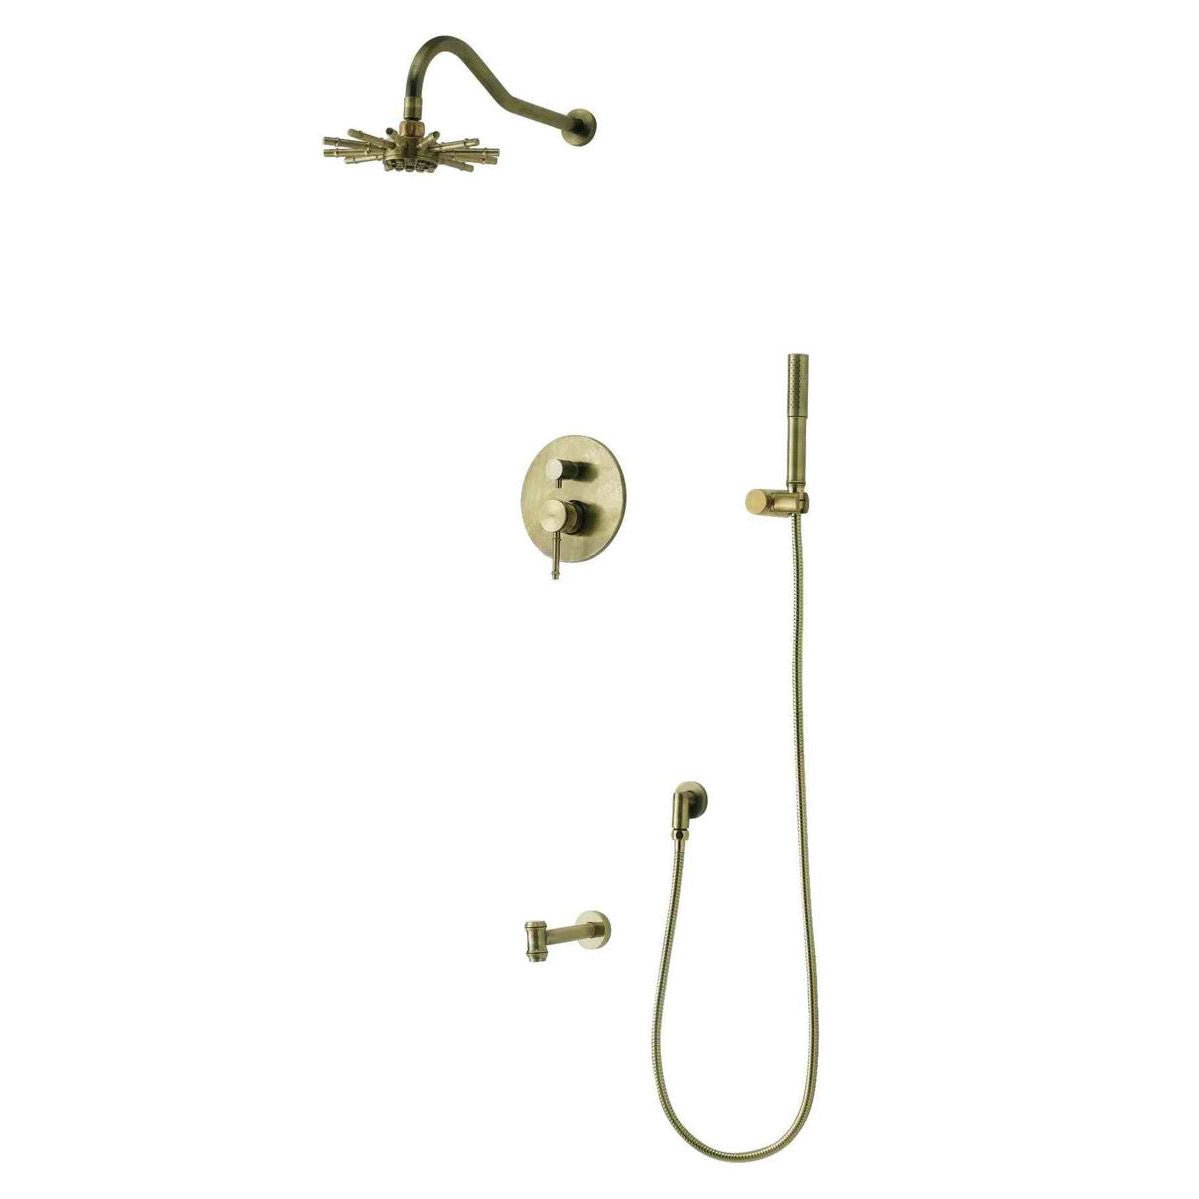 Bamboo Design Bronze Concealed Shower - |VESIMI Design| Luxury and Rustic bathrooms online